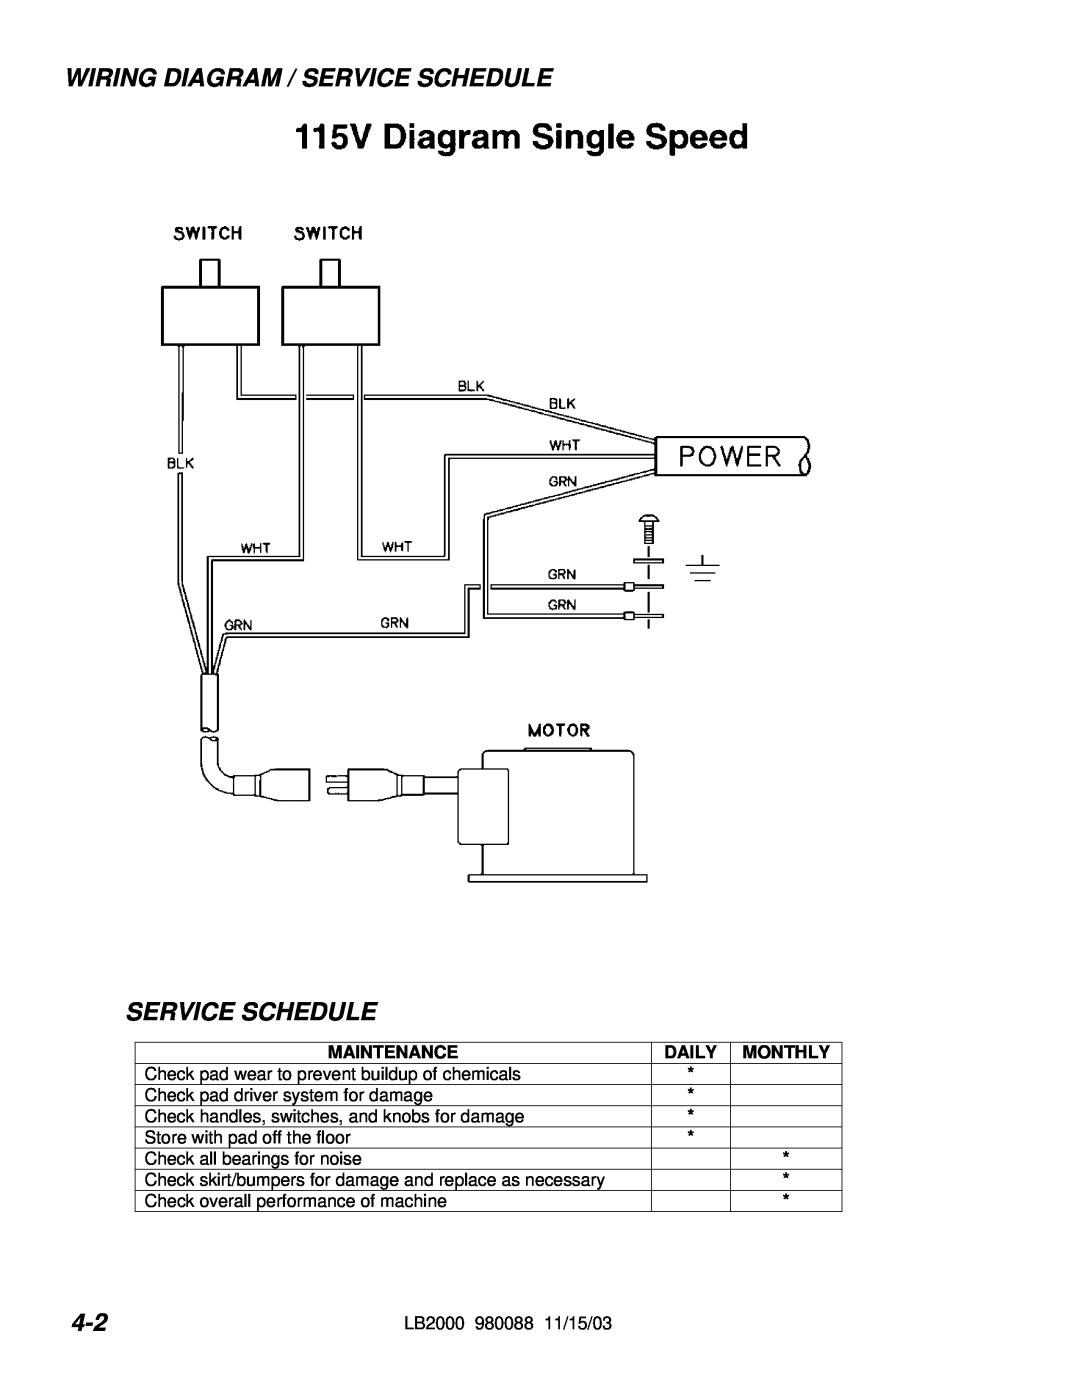 Windsor LB2000 manual Wiring Diagram / Service Schedule 